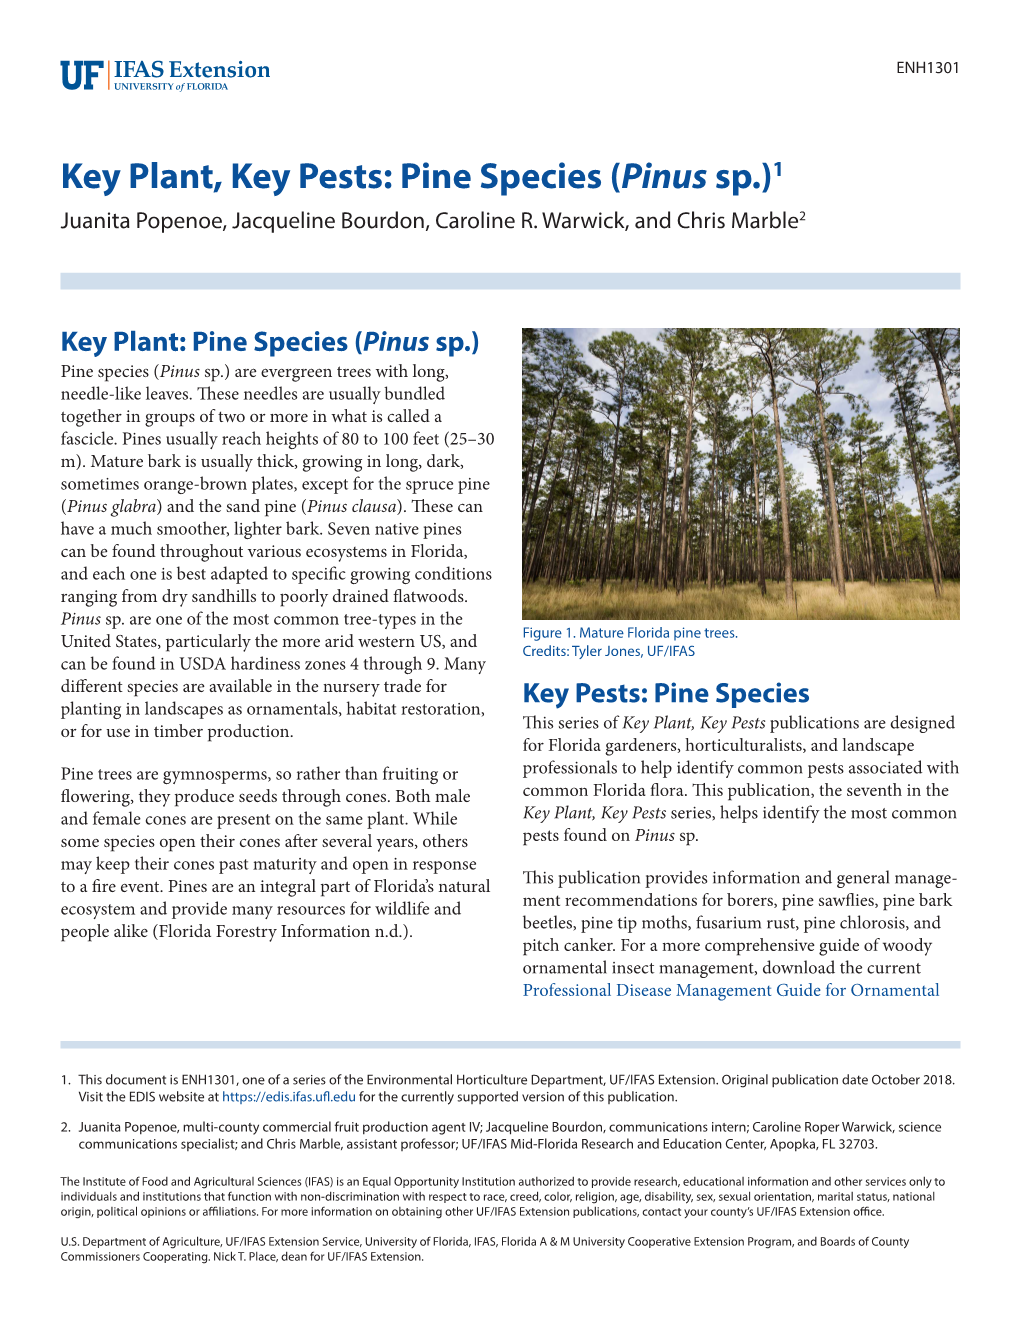 Pine Species (Pinus Sp.)1 Juanita Popenoe, Jacqueline Bourdon, Caroline R